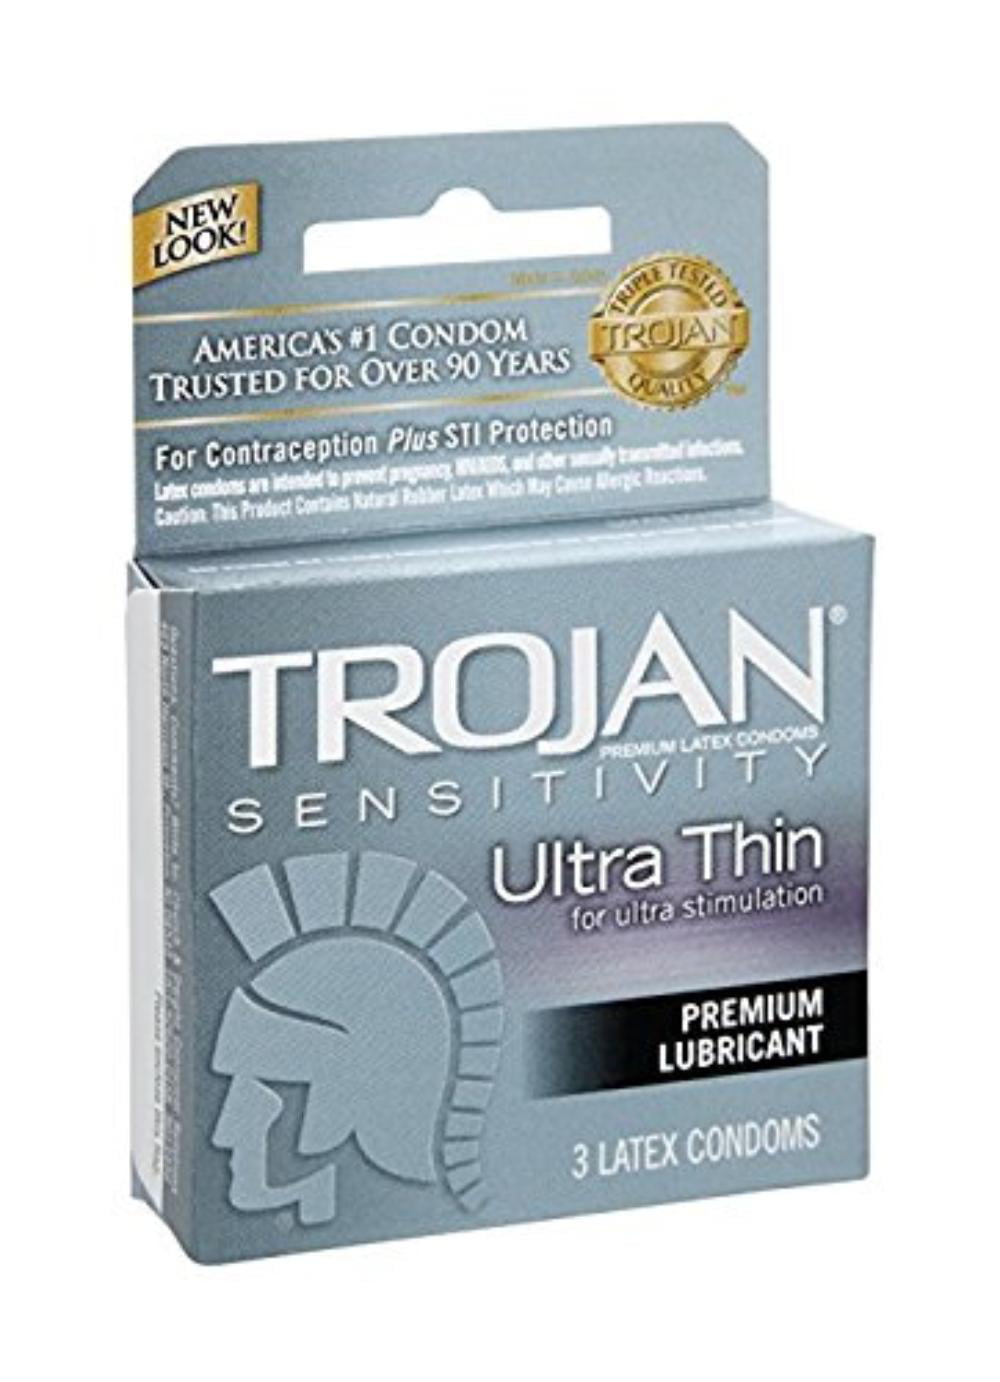 are ultra thin condoms still safe